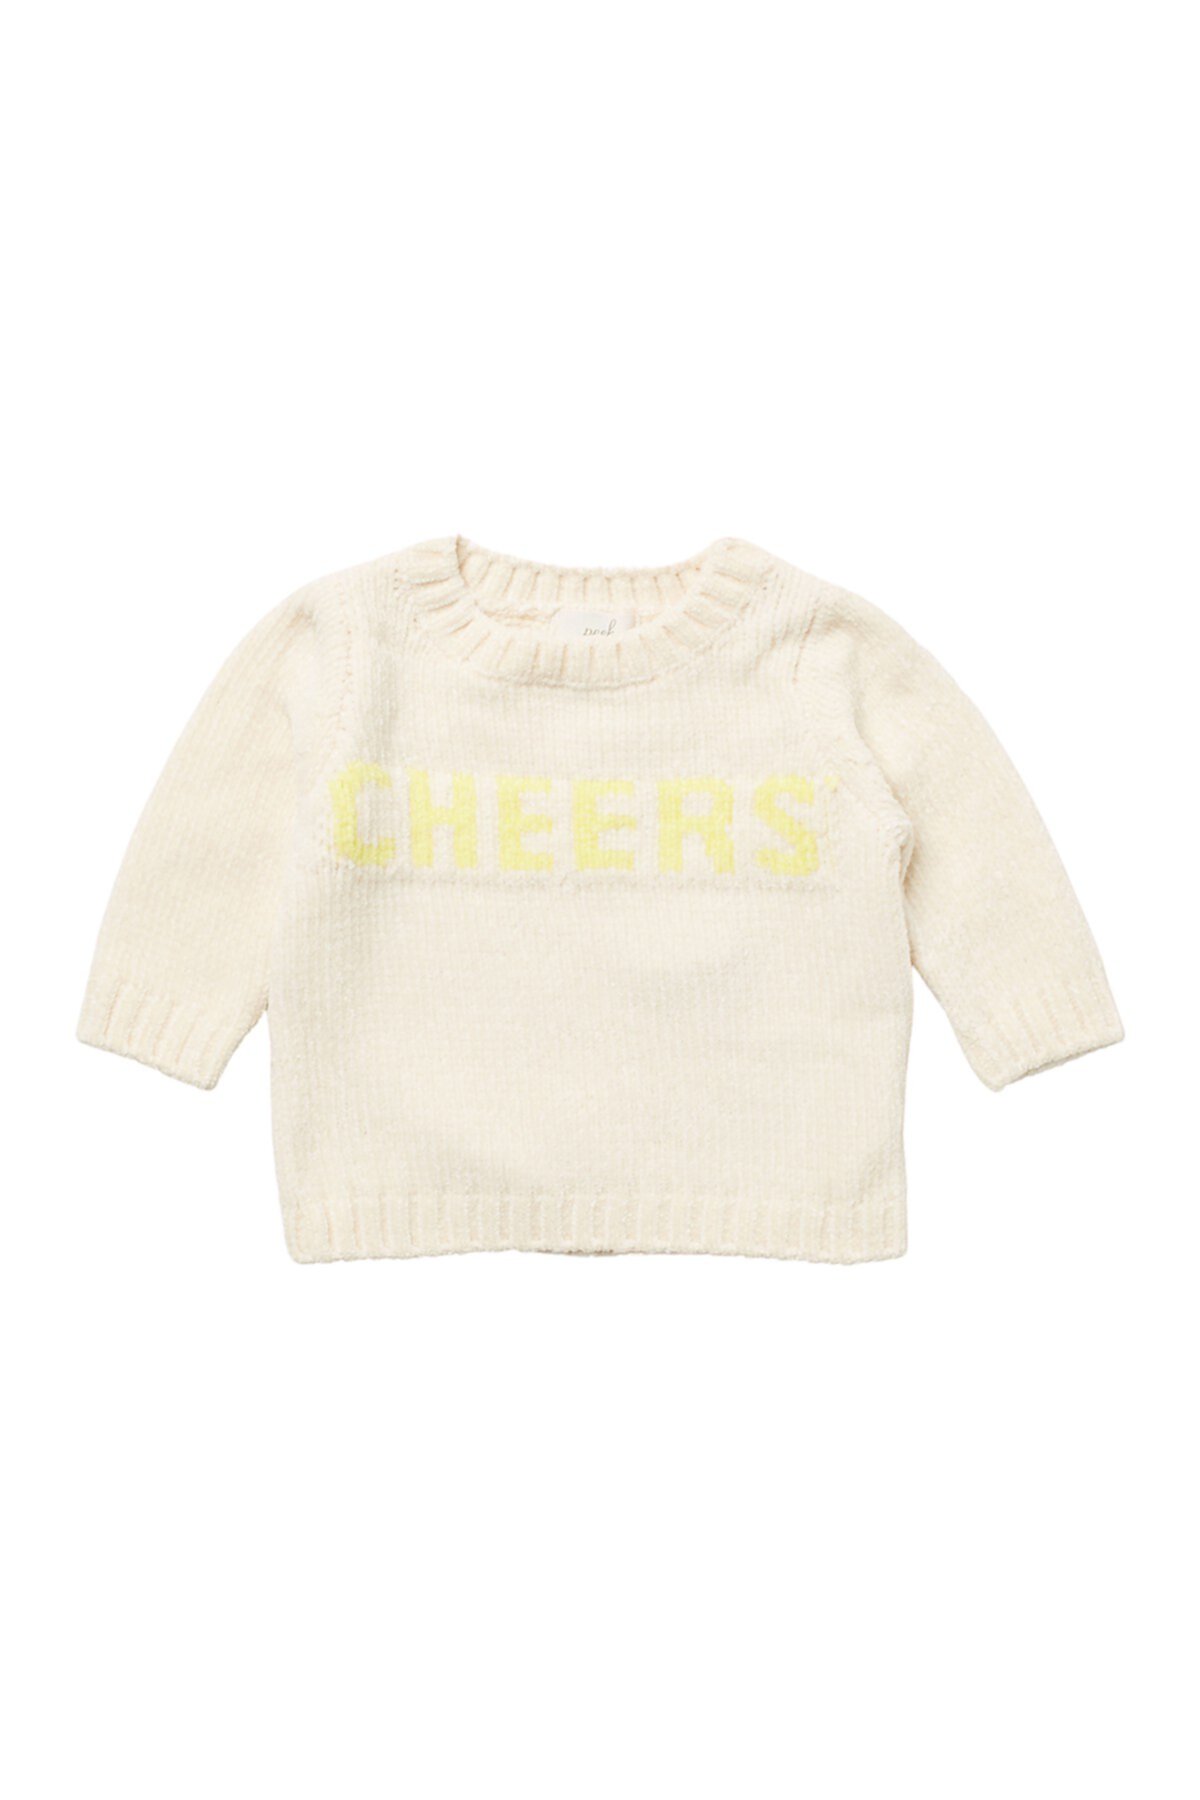 Taylor Cheer Chenille Sweater (Baby Boys) PEEK ESSENTIALS